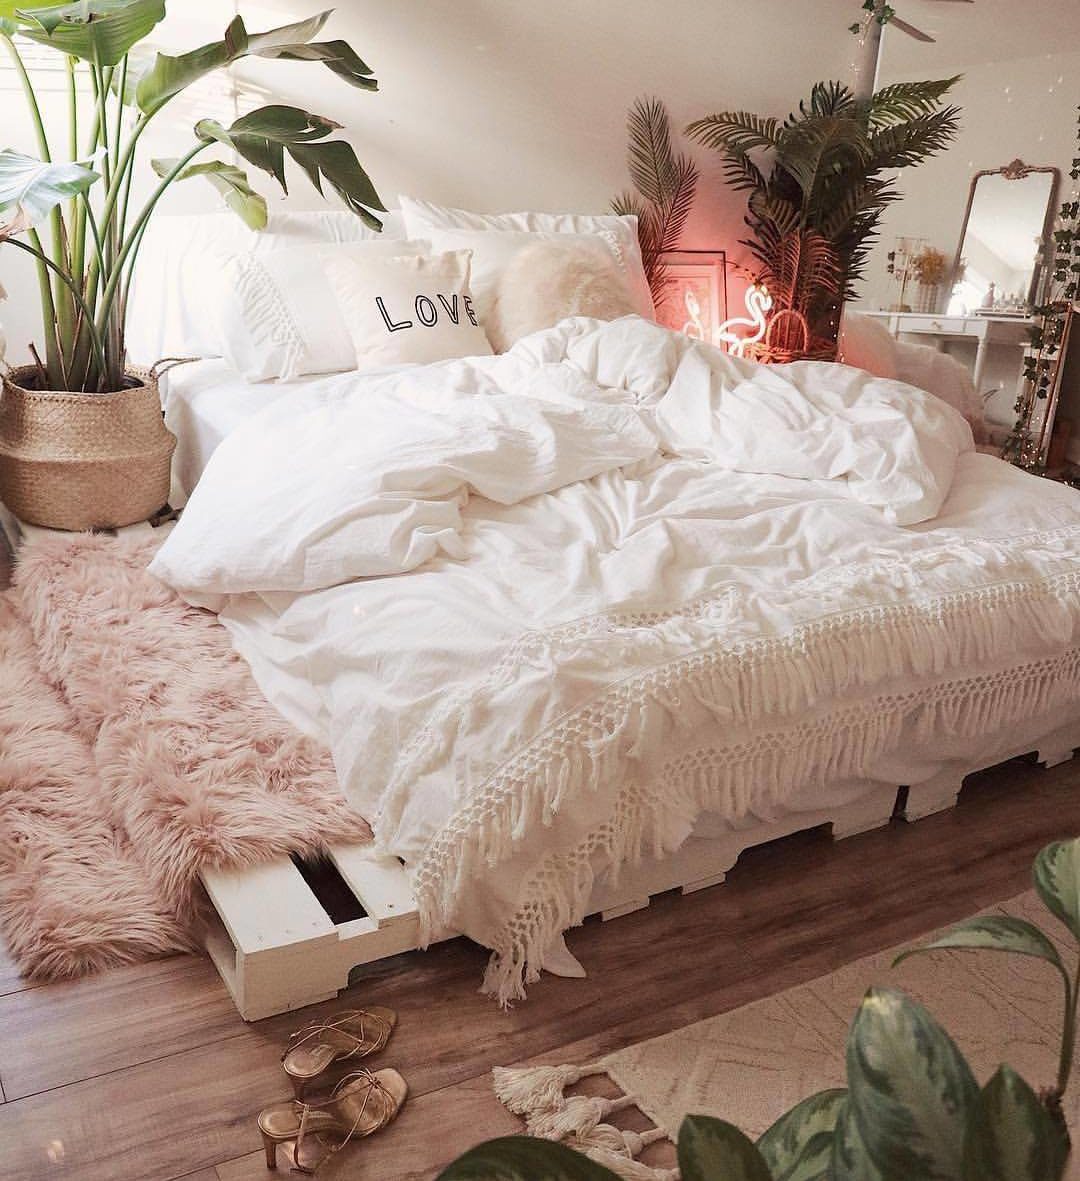 Modern Chic Feminine Bedroom Pallet Bed Natural Brick Wall Neon Sign Decor Fur Carpet